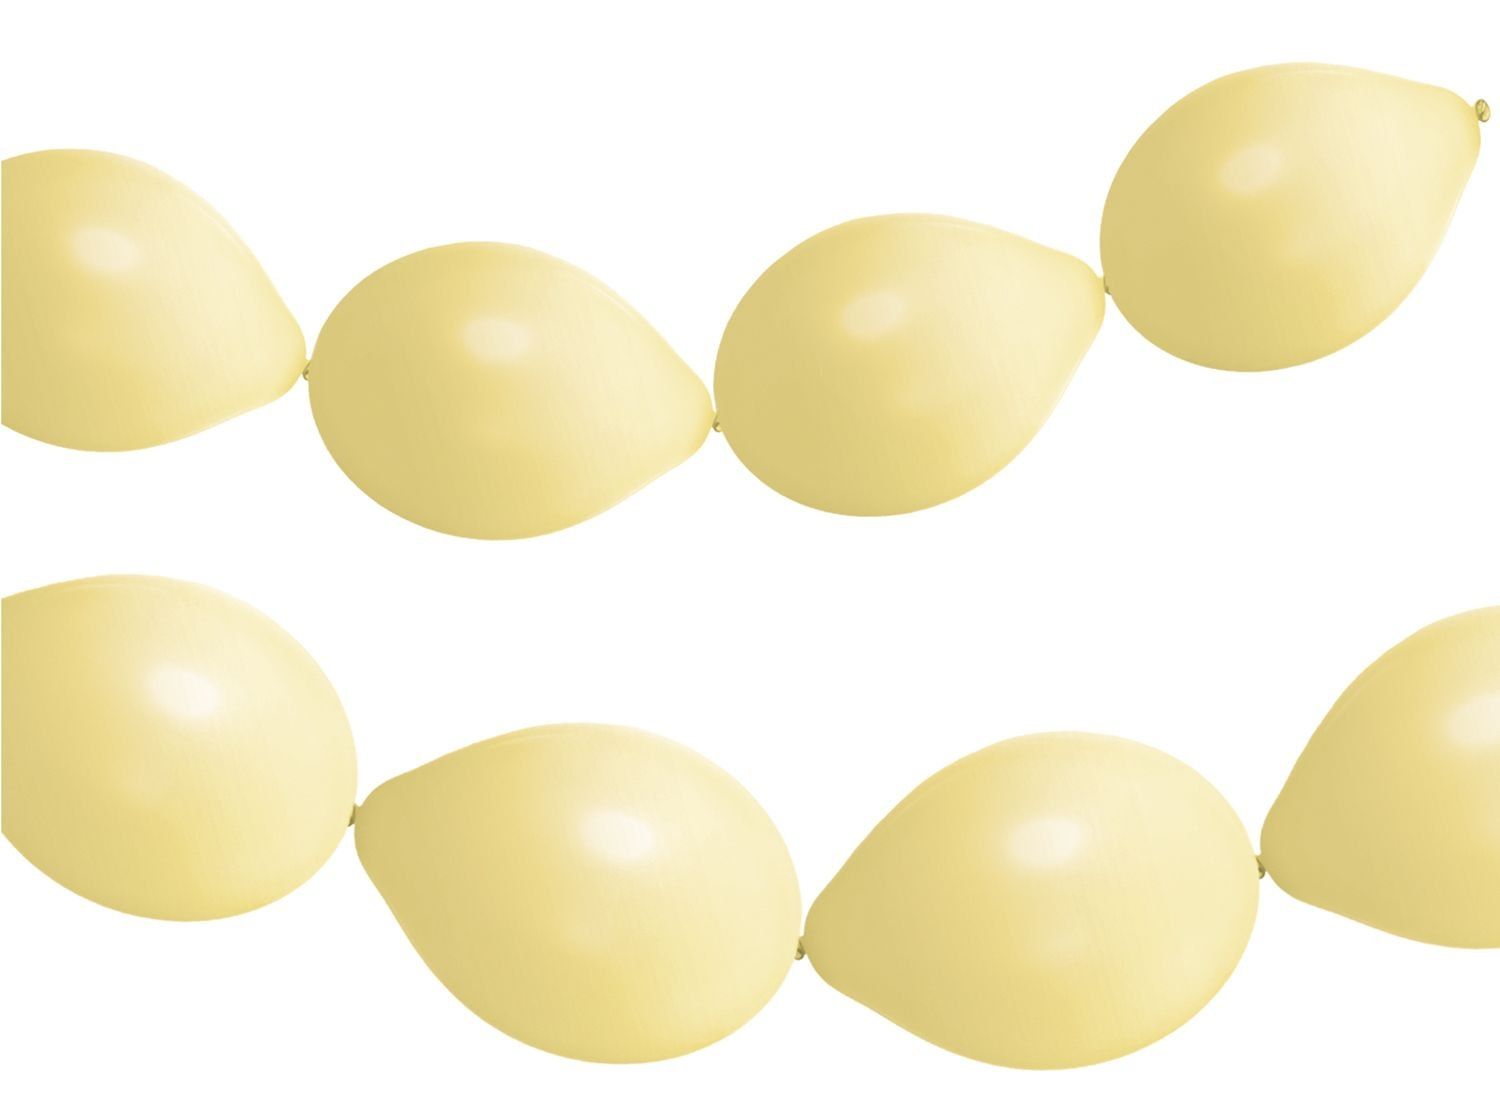 Gele ballonnenslinger matte kleur